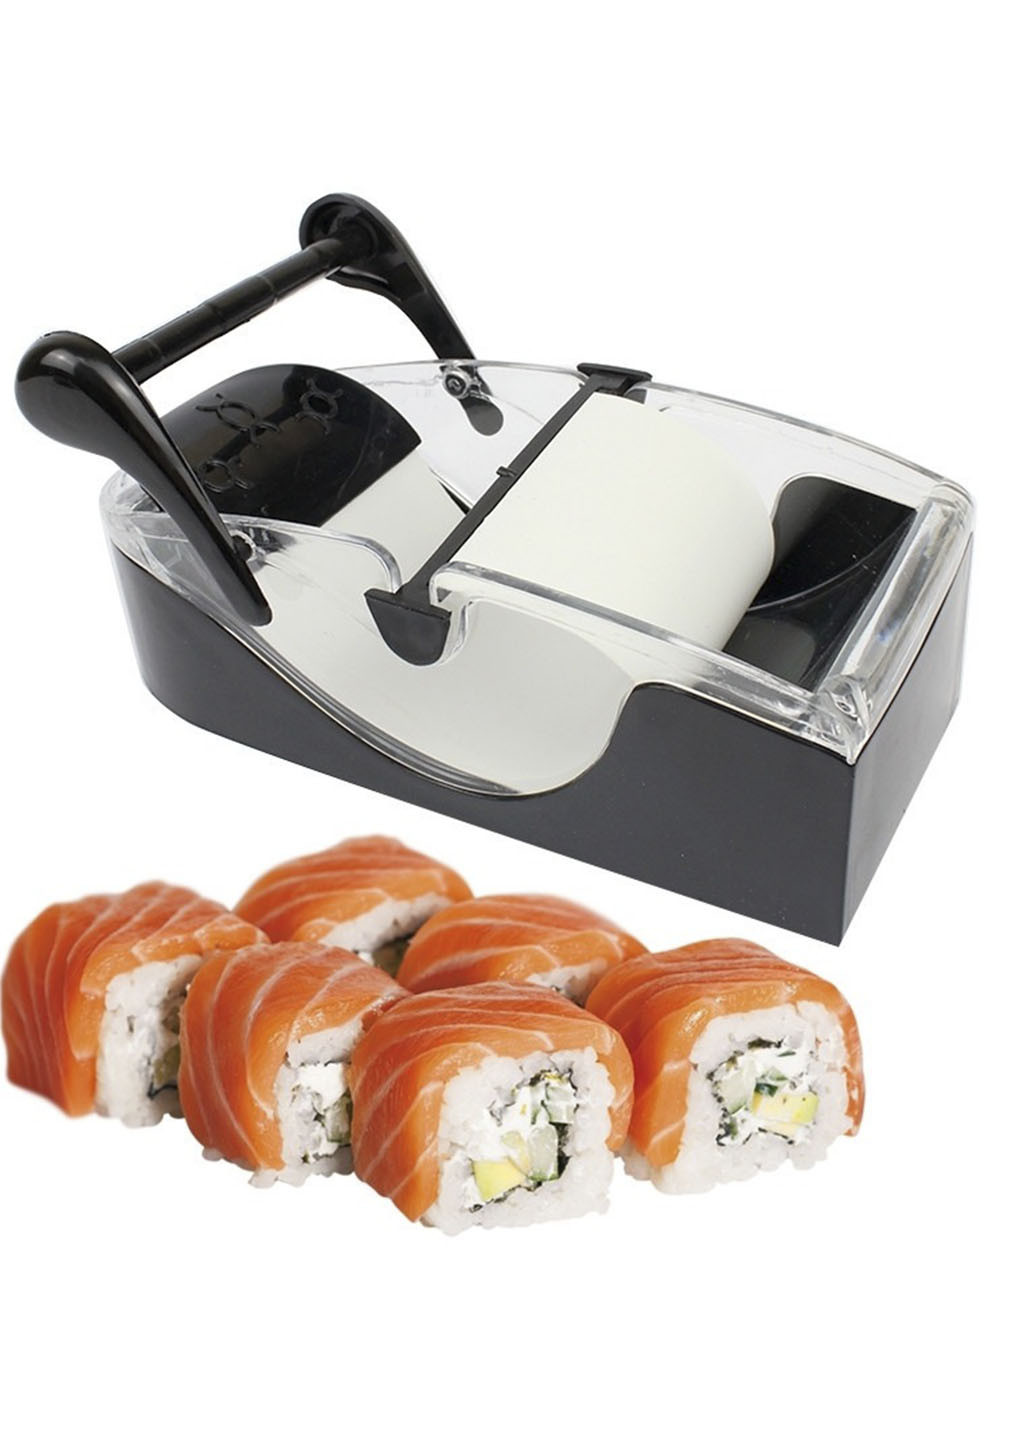 Прибор для приготовления суши и роллов Perfect Roll Sushi! машинка для закрутки суши и роллов XO (253059326)